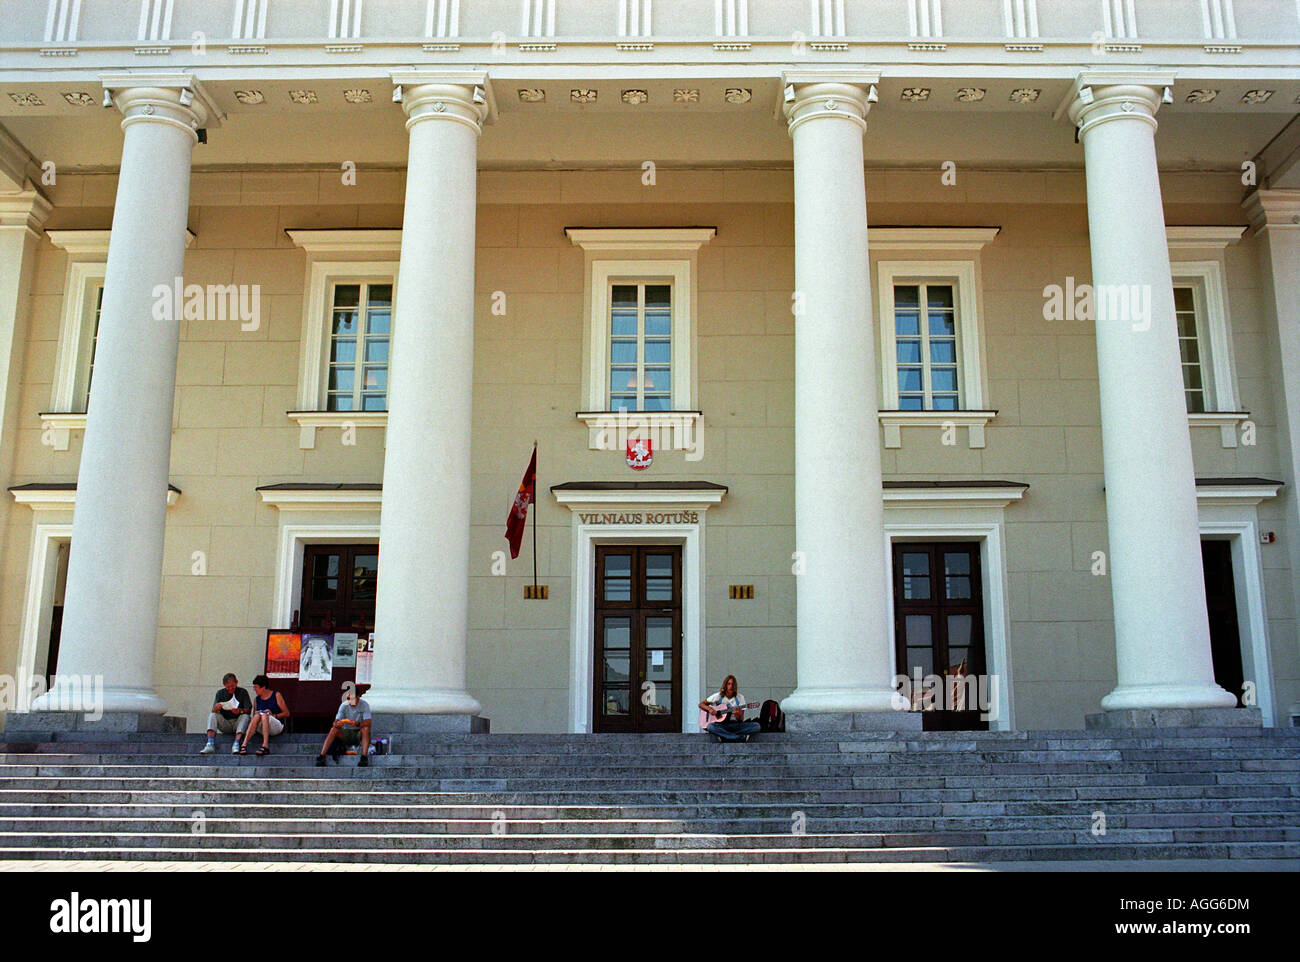 The city hall in Vilnius (Vilniaus Rotuse), Lithuania Stock Photo